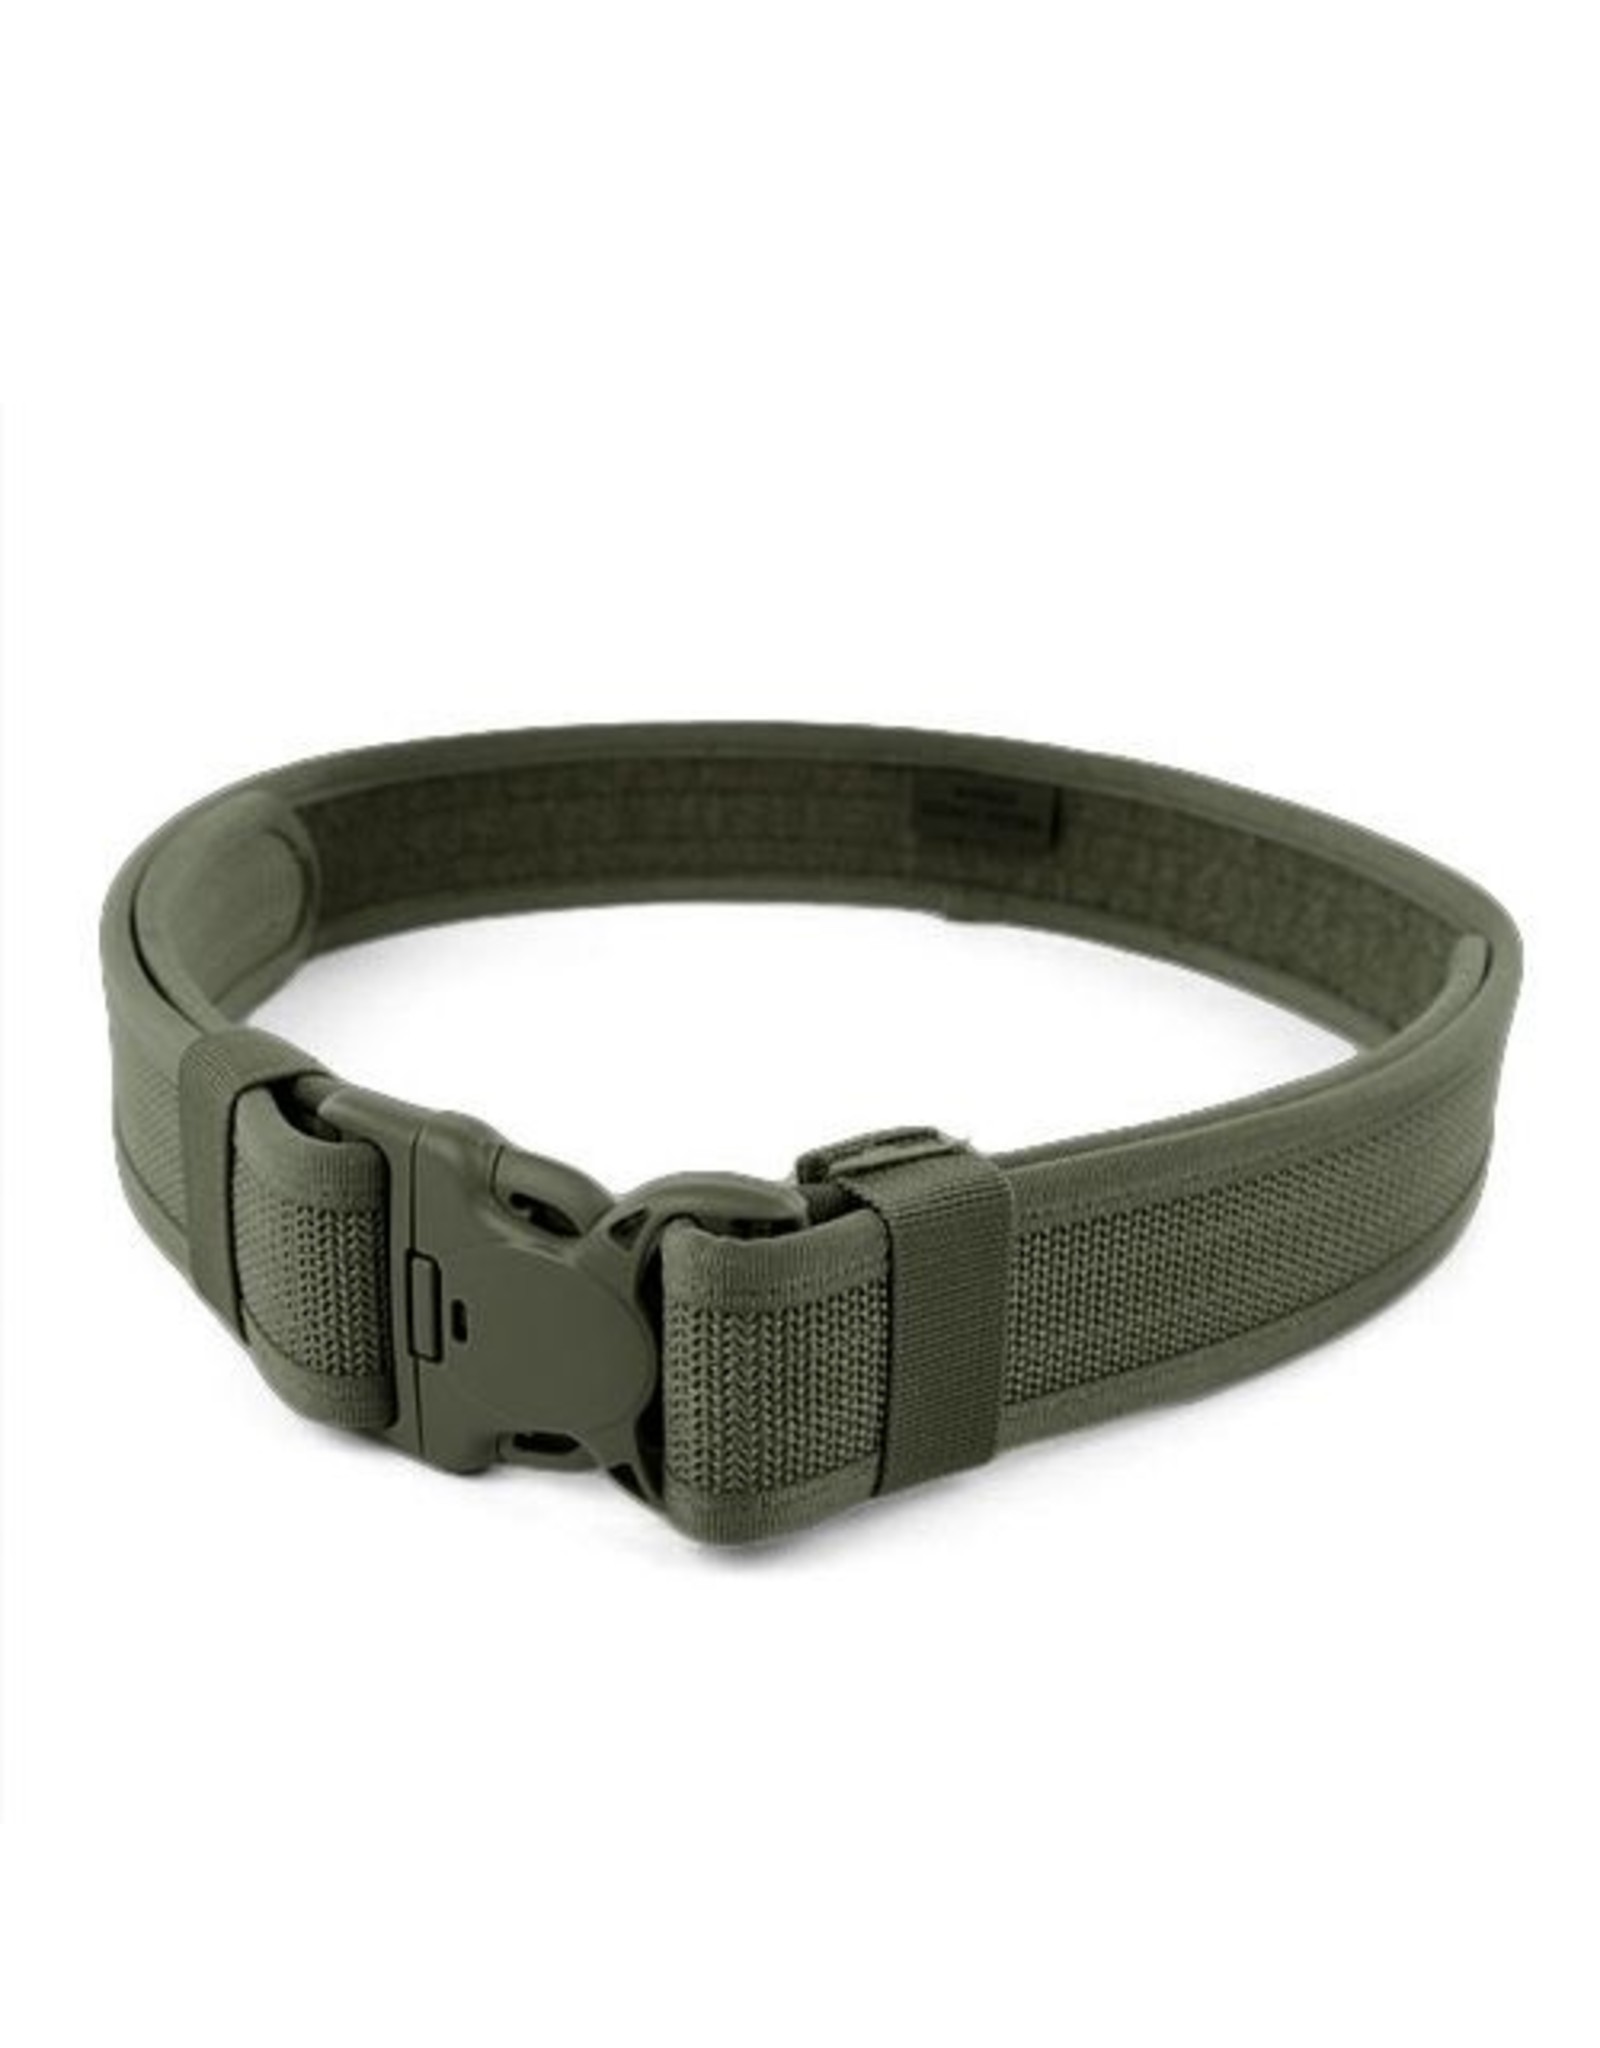 Warrior Duty Belt - Olive Drab